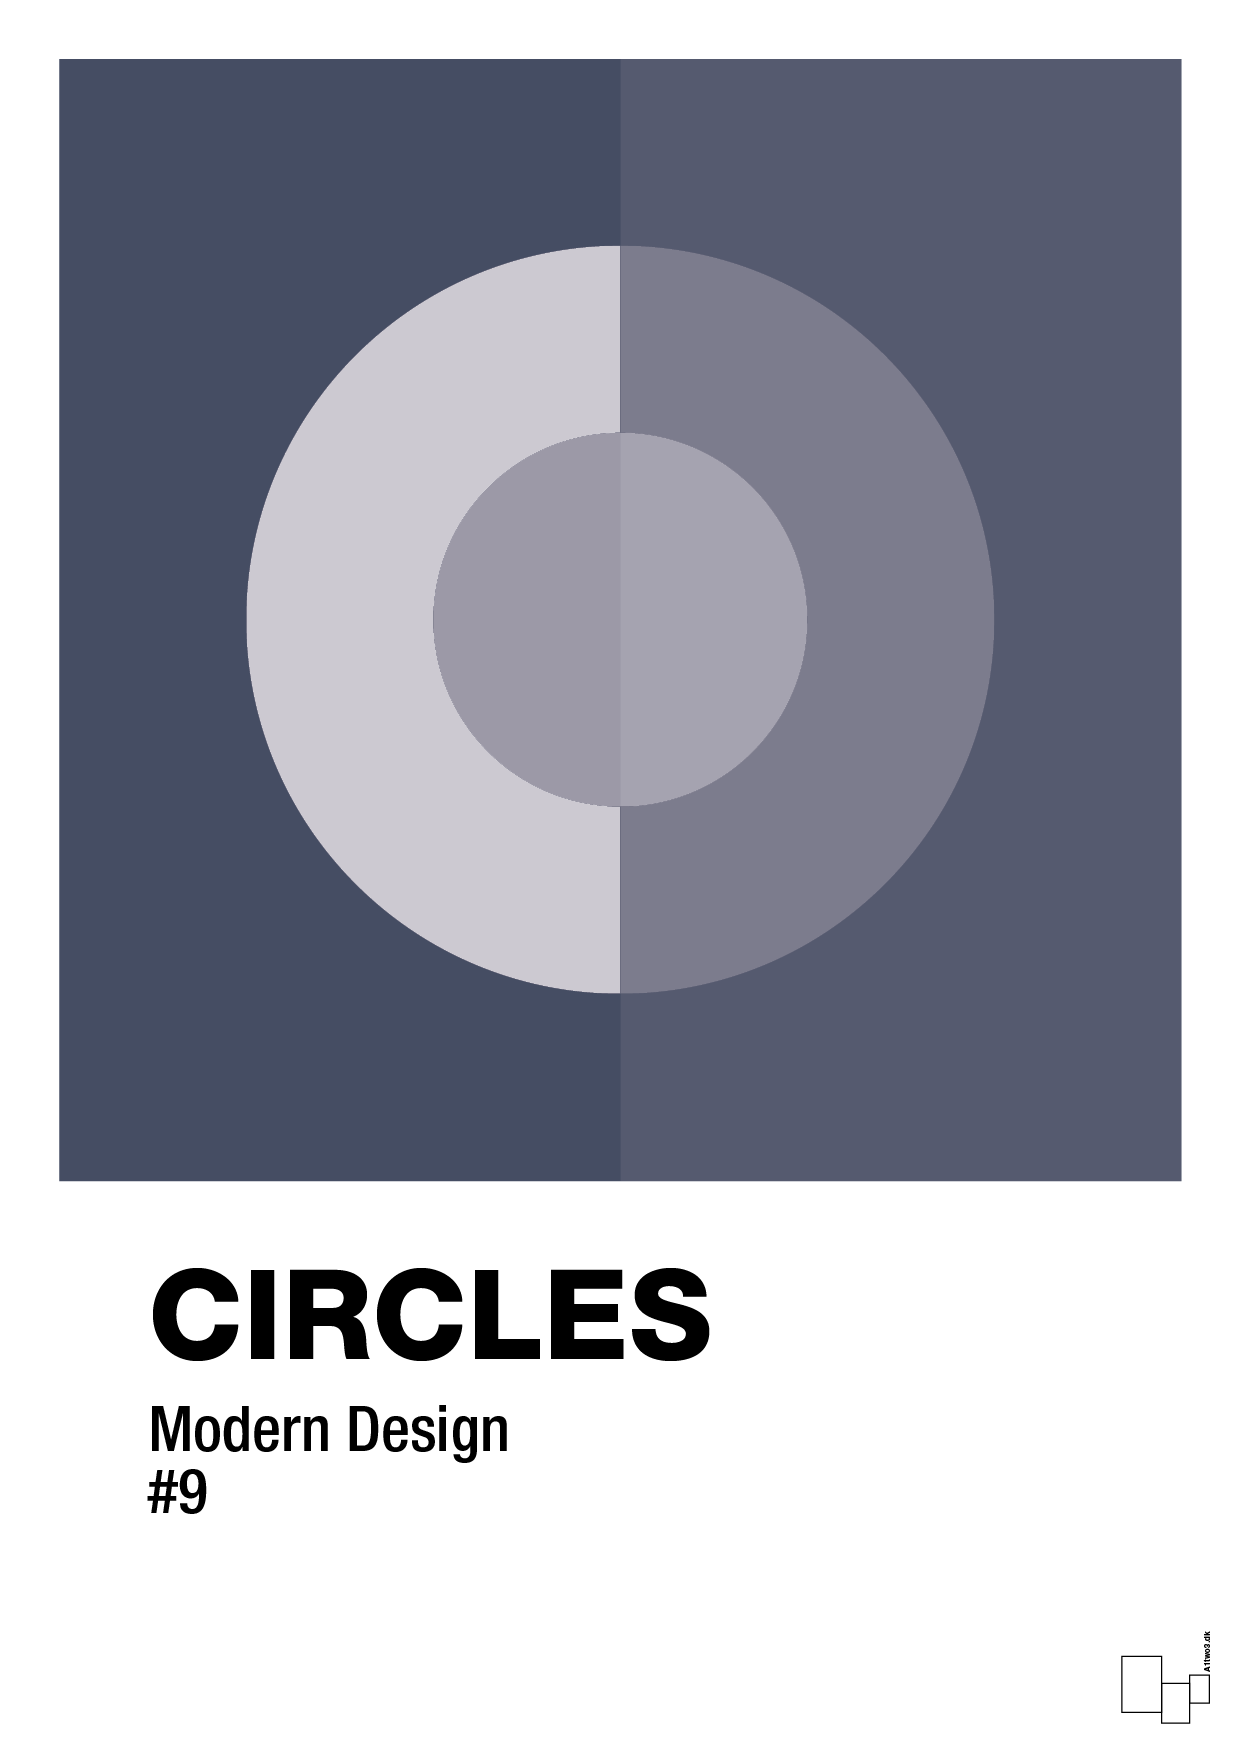 circles #9 - Plakat med Grafik i Petrol